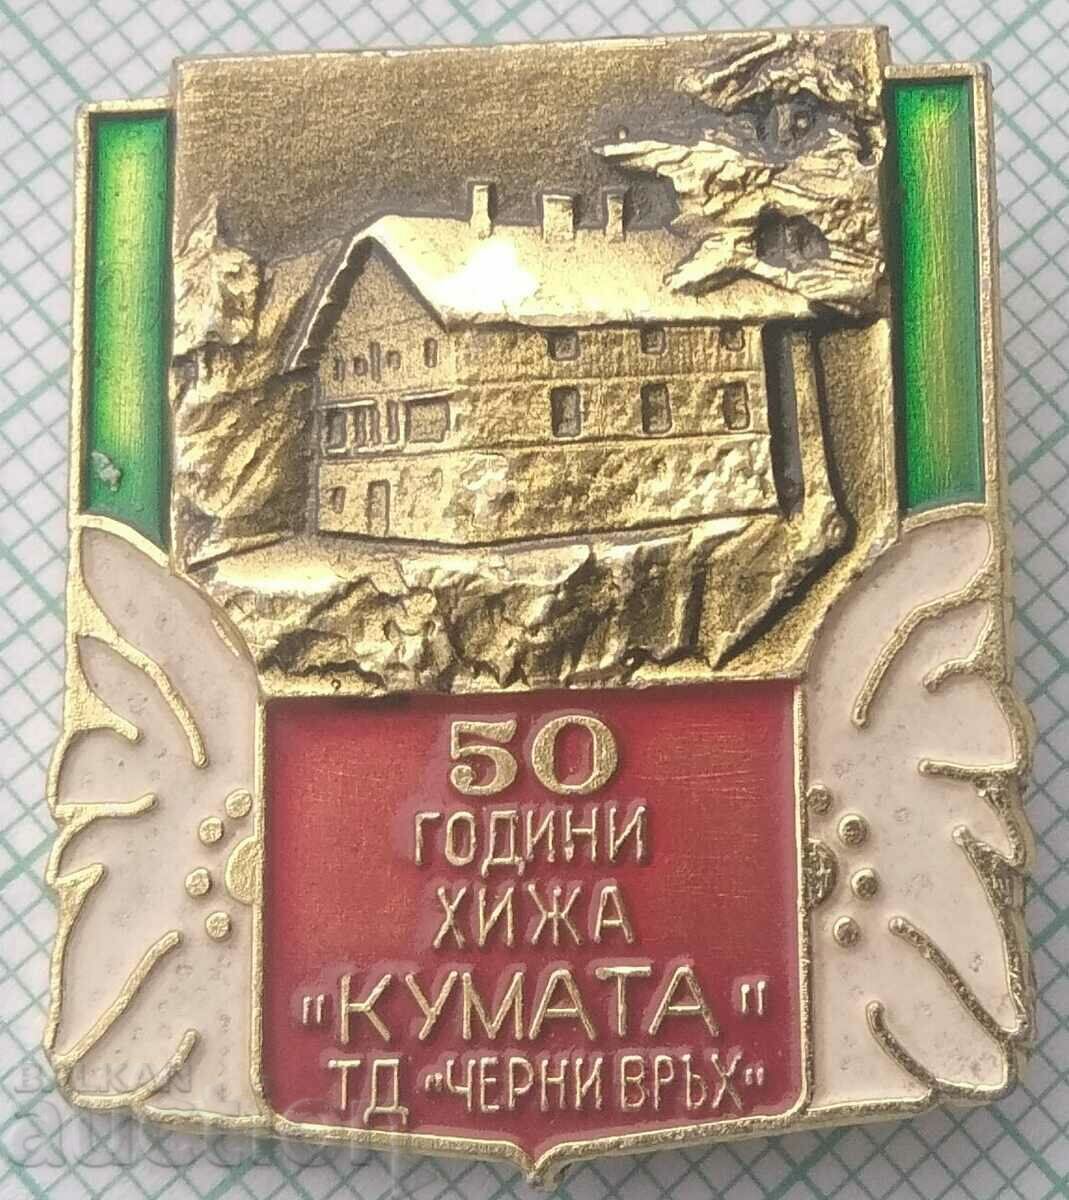 15040 Tourist Association Cherni Vrah - 50g Kumata hut